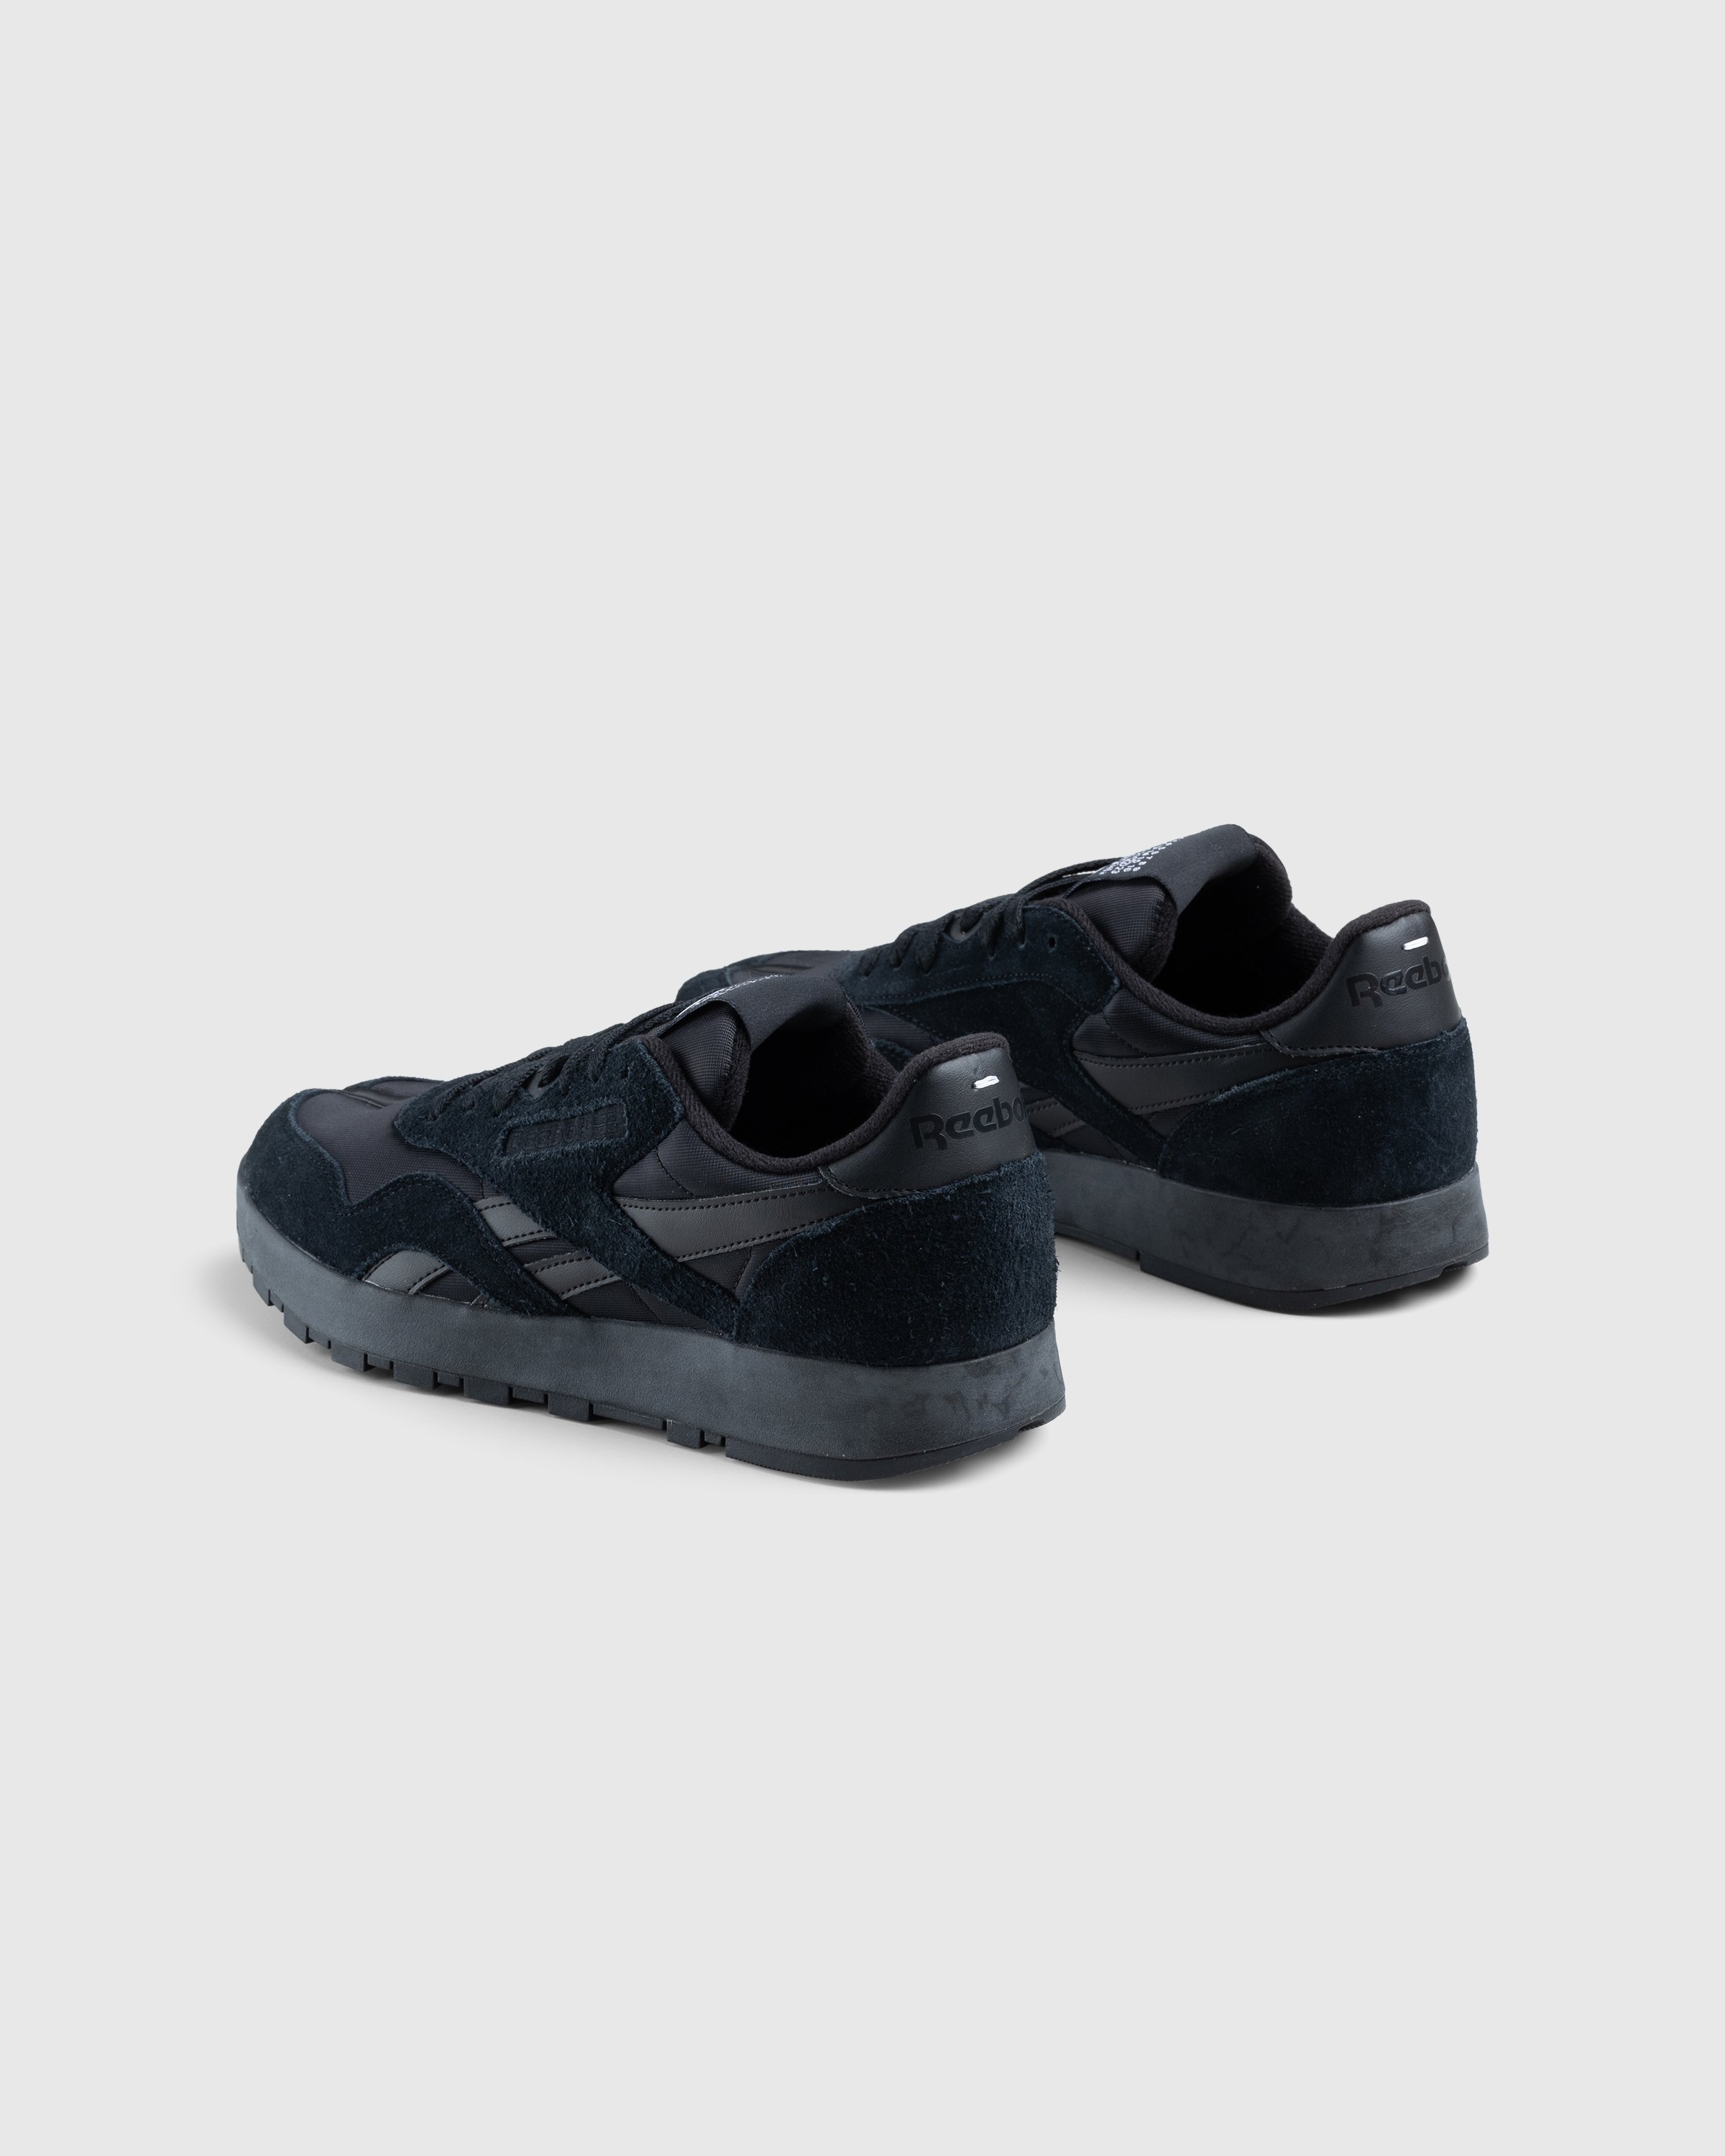 Reebok x Maison Margiela - Project 0 Classic Nylon Tabi Black - Footwear - Black - Image 4